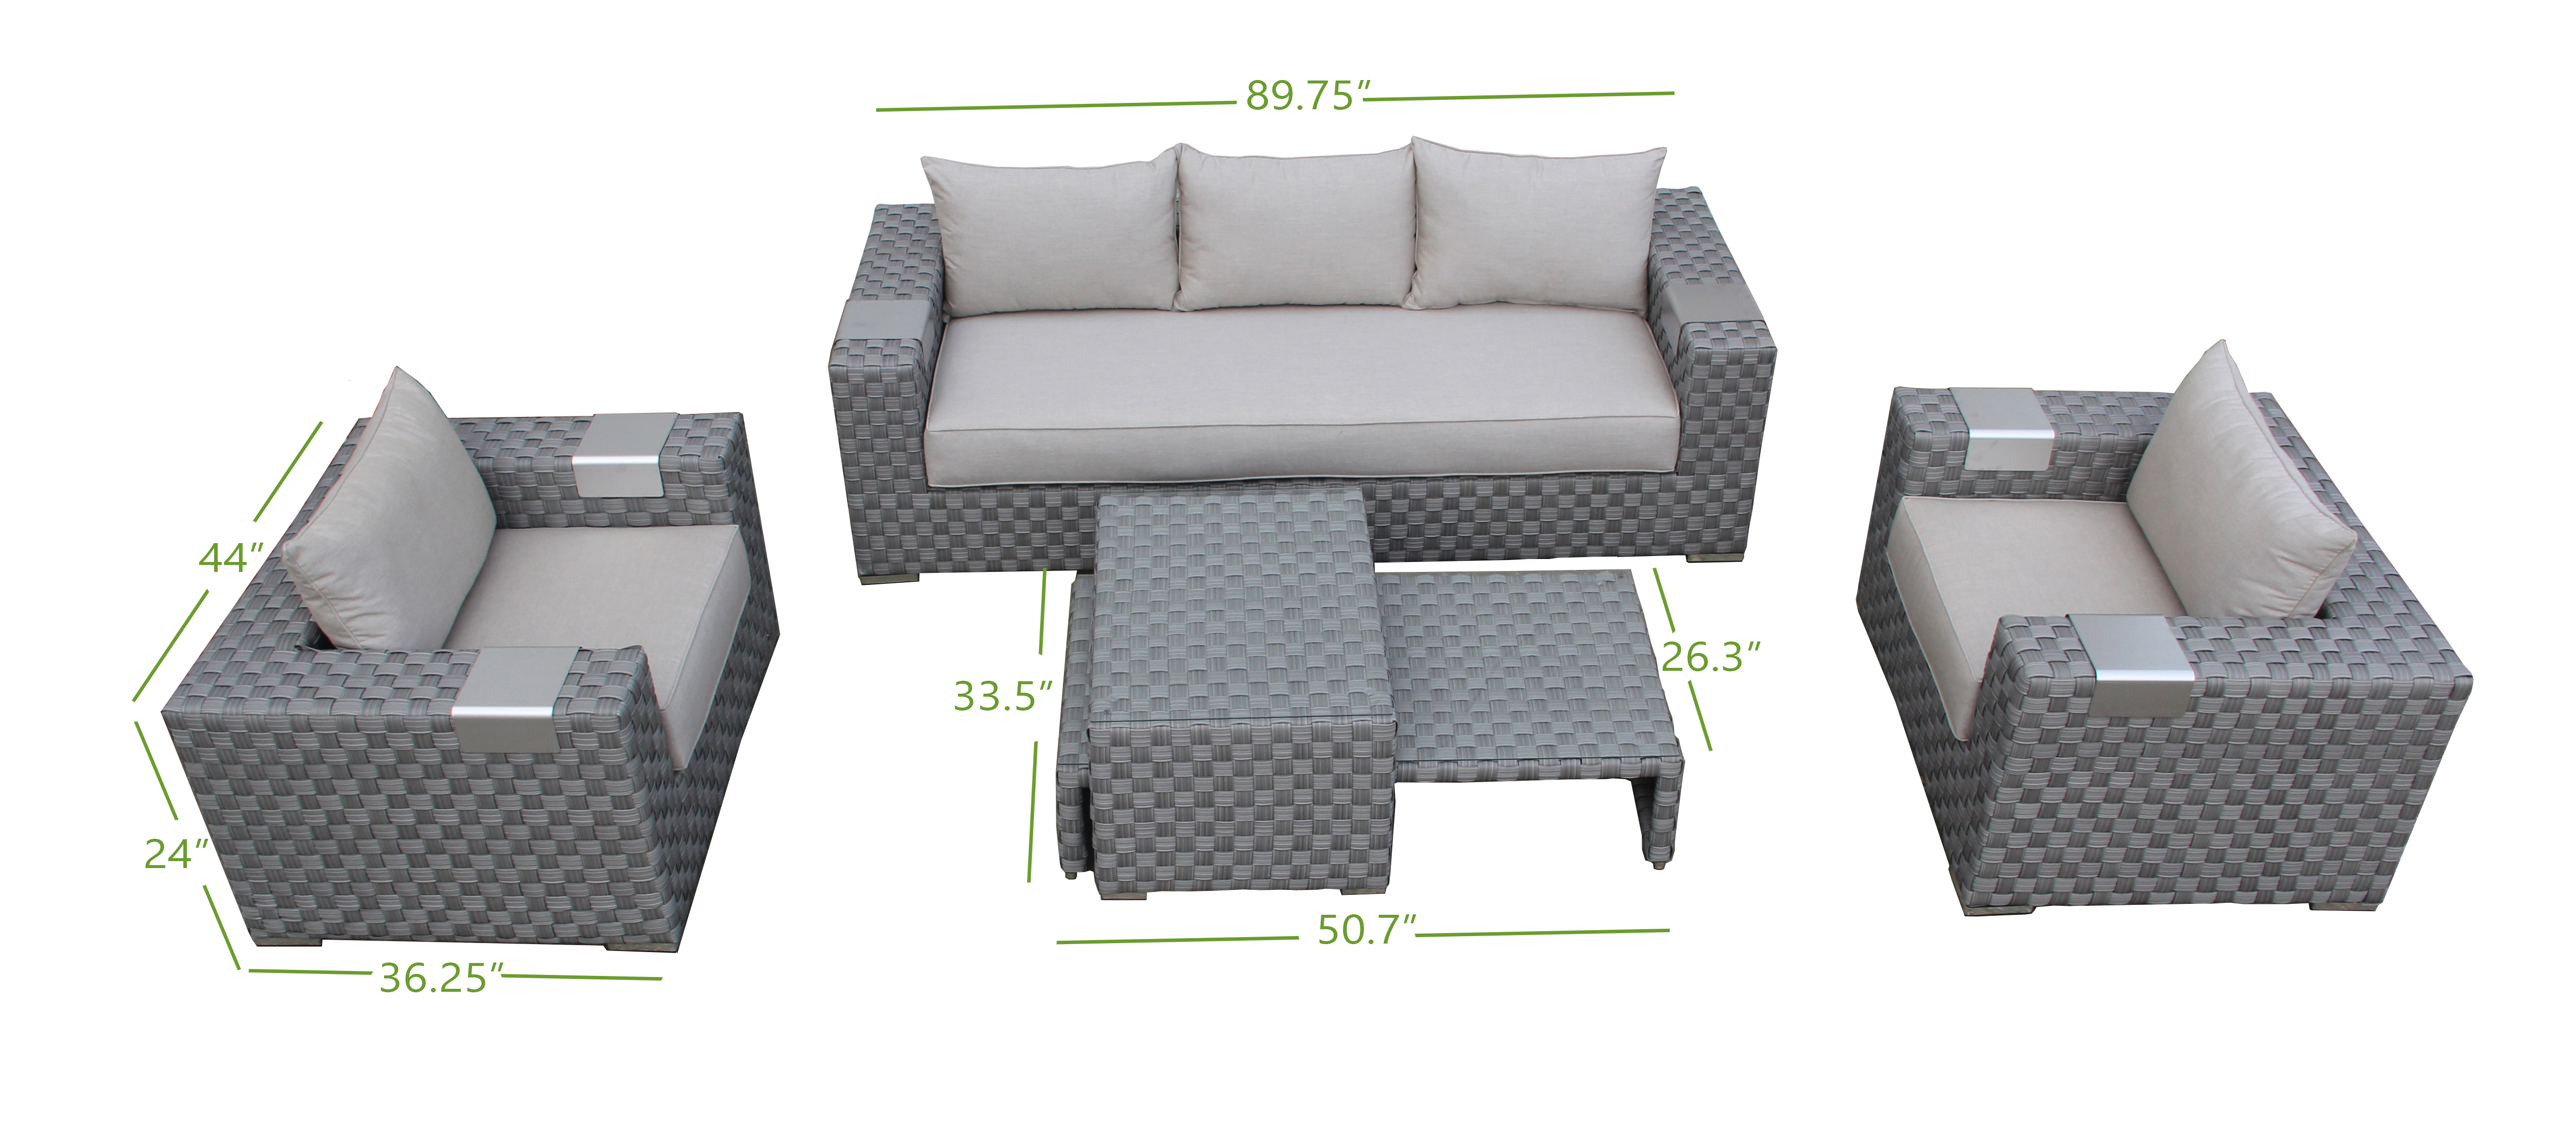 5 pc outdoor patio furniture